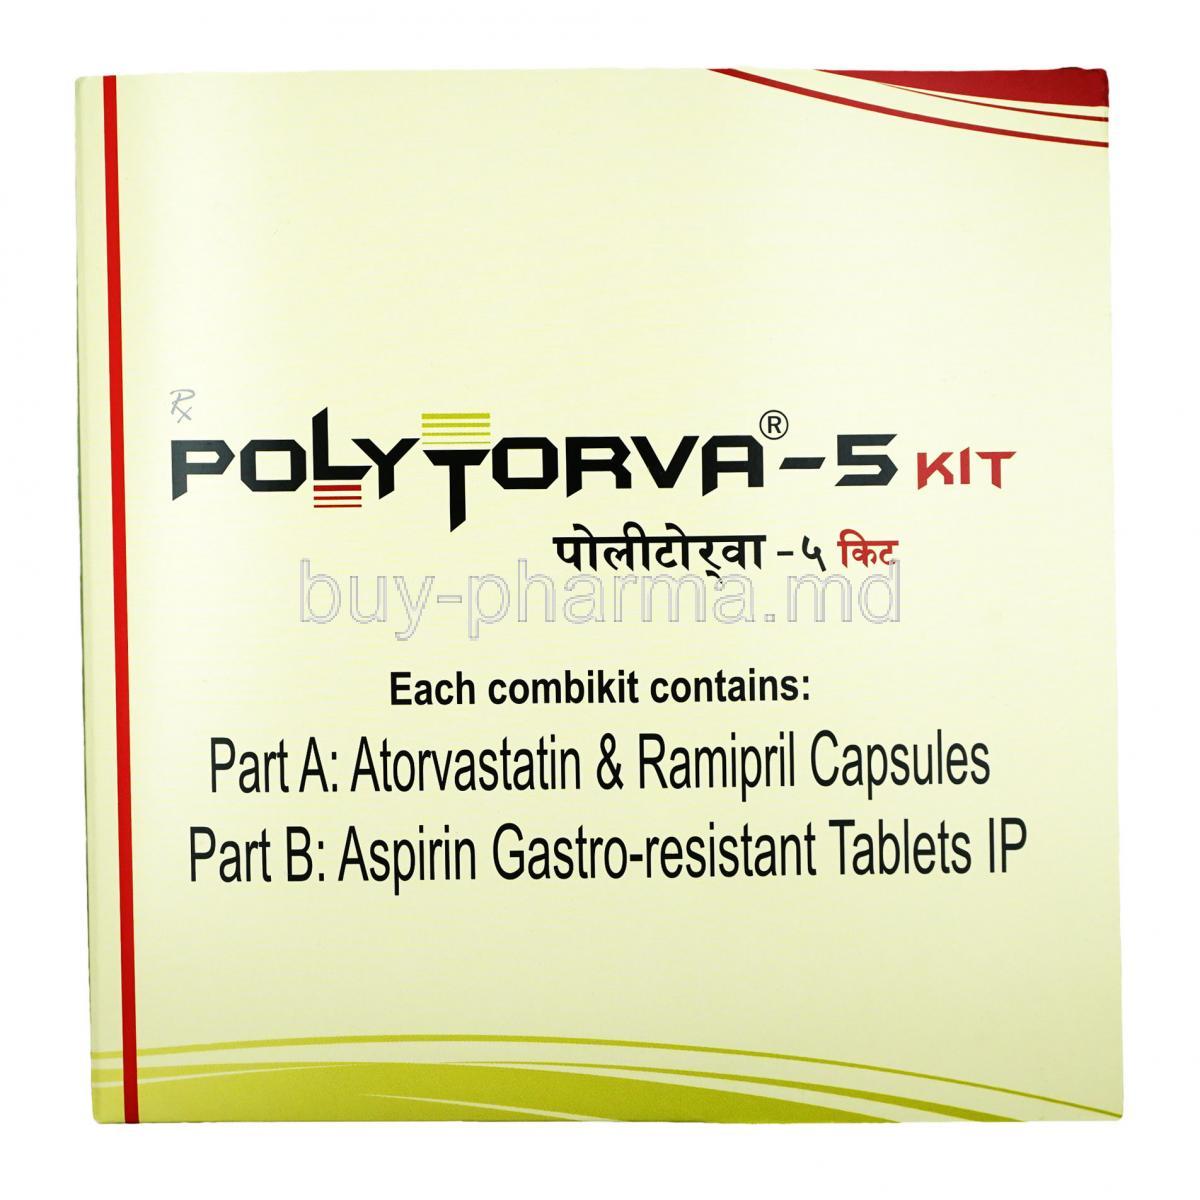 Polytorva Kit, Atorvastatin 10mg +  Ramipril 5mg & Aspirin 75mg, Combikit (Cupsule & Tablet),Box